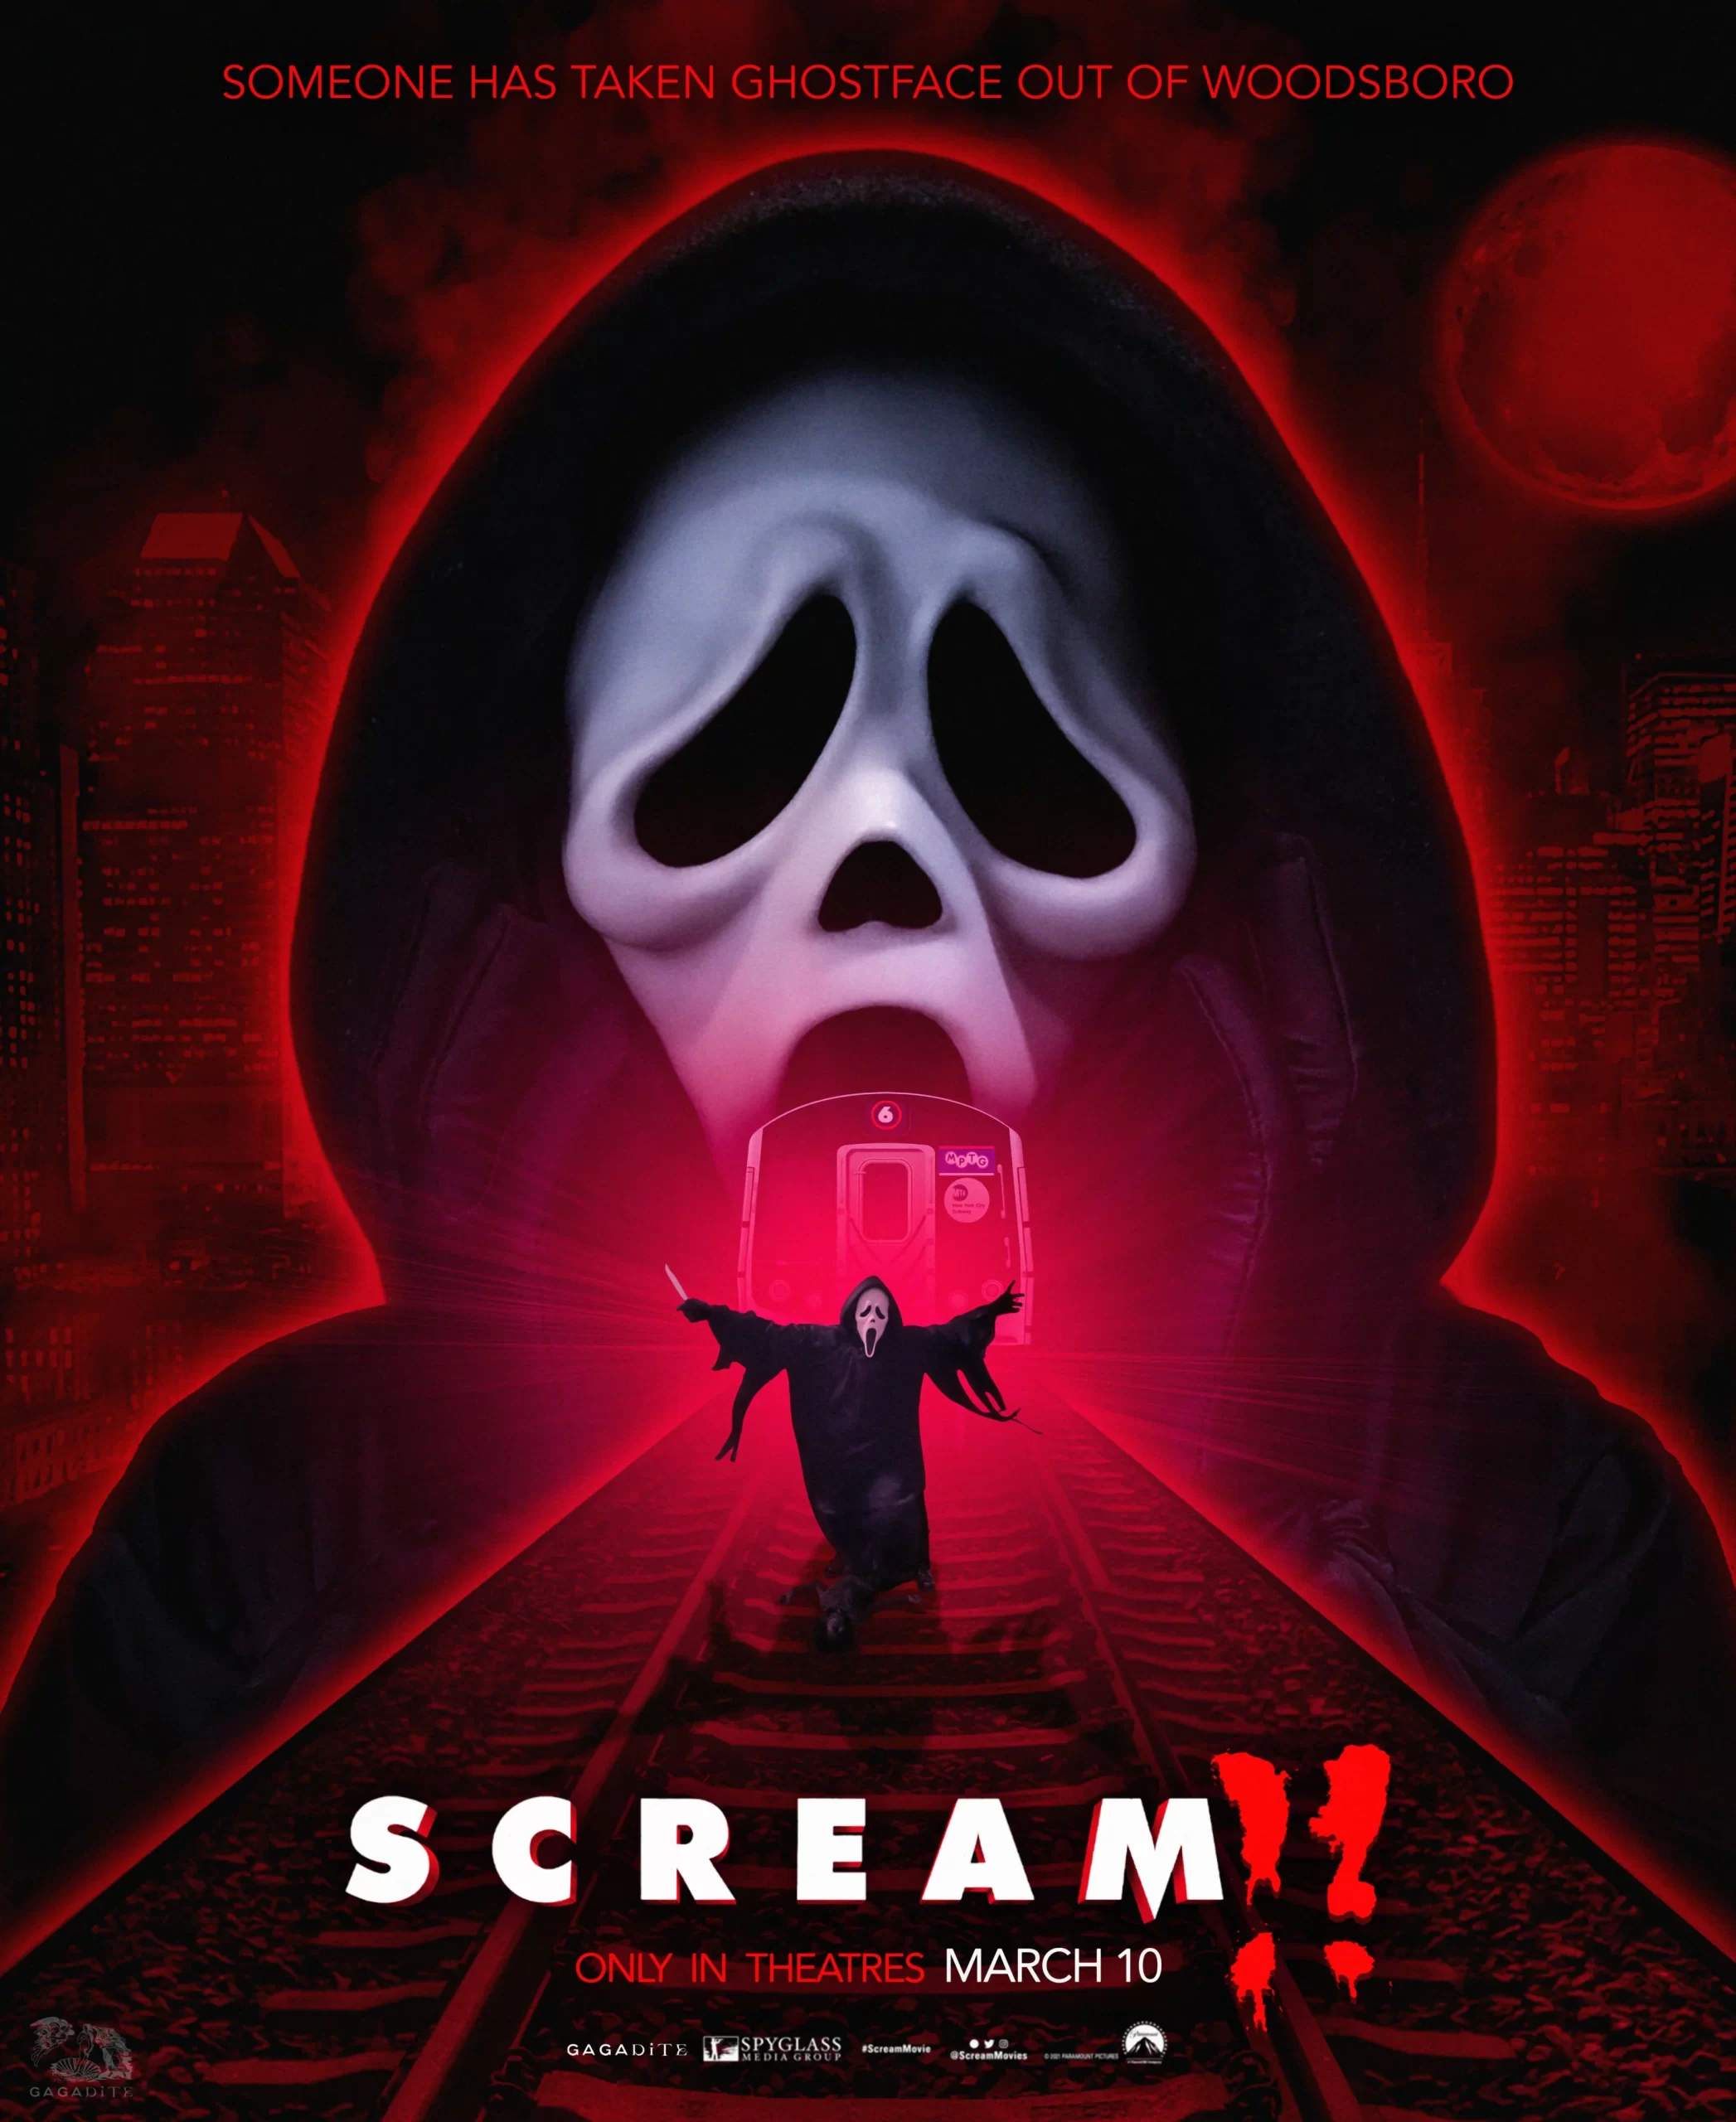 Scream VI: Ghostface Will Keep You On Knife’s Edge